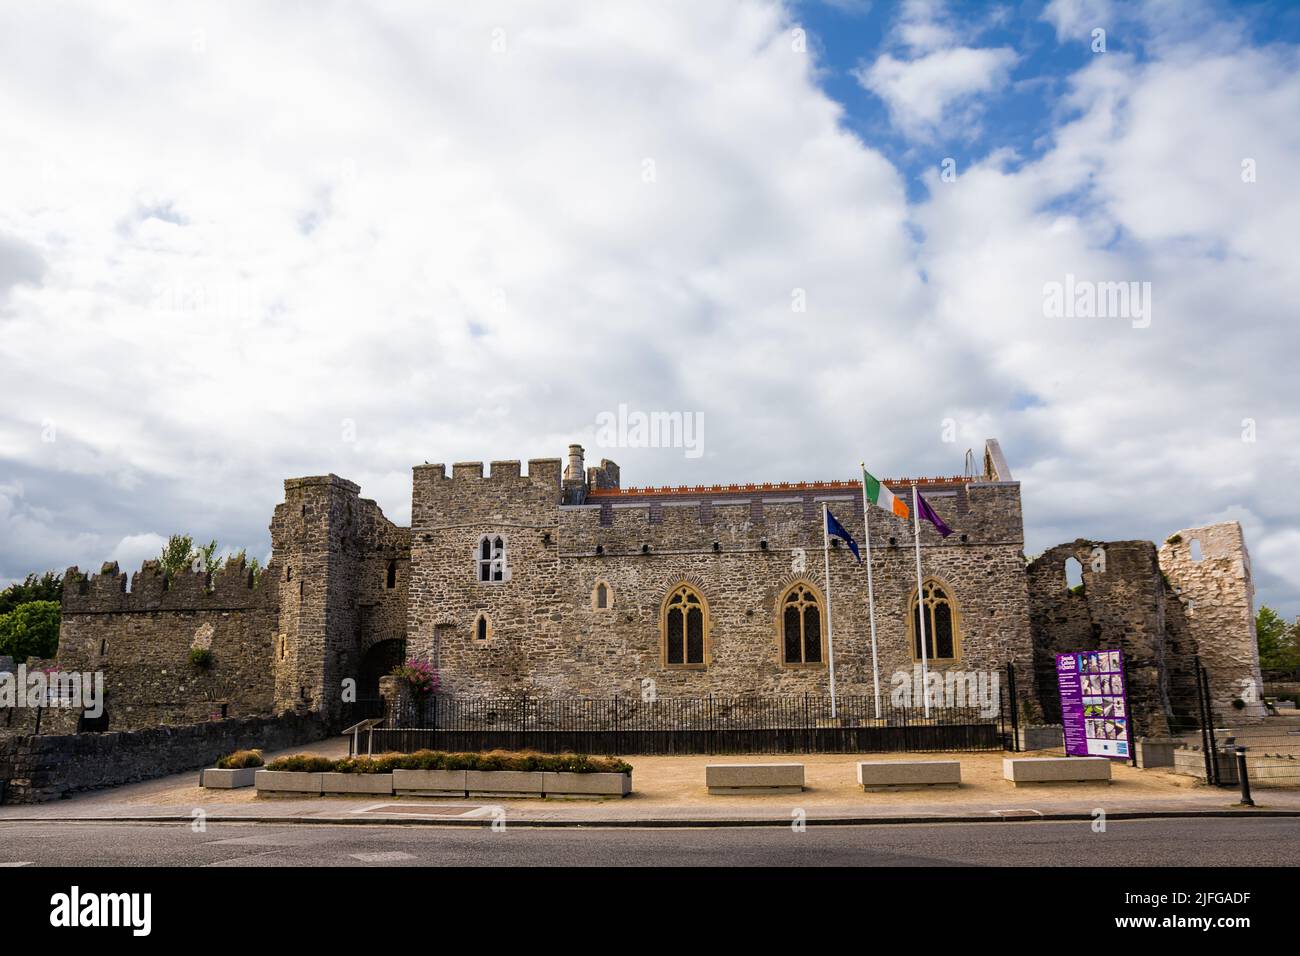 Swords, Ireland - May 21, 2022: Castle in the centre of Swords, Ireland. Stock Photo